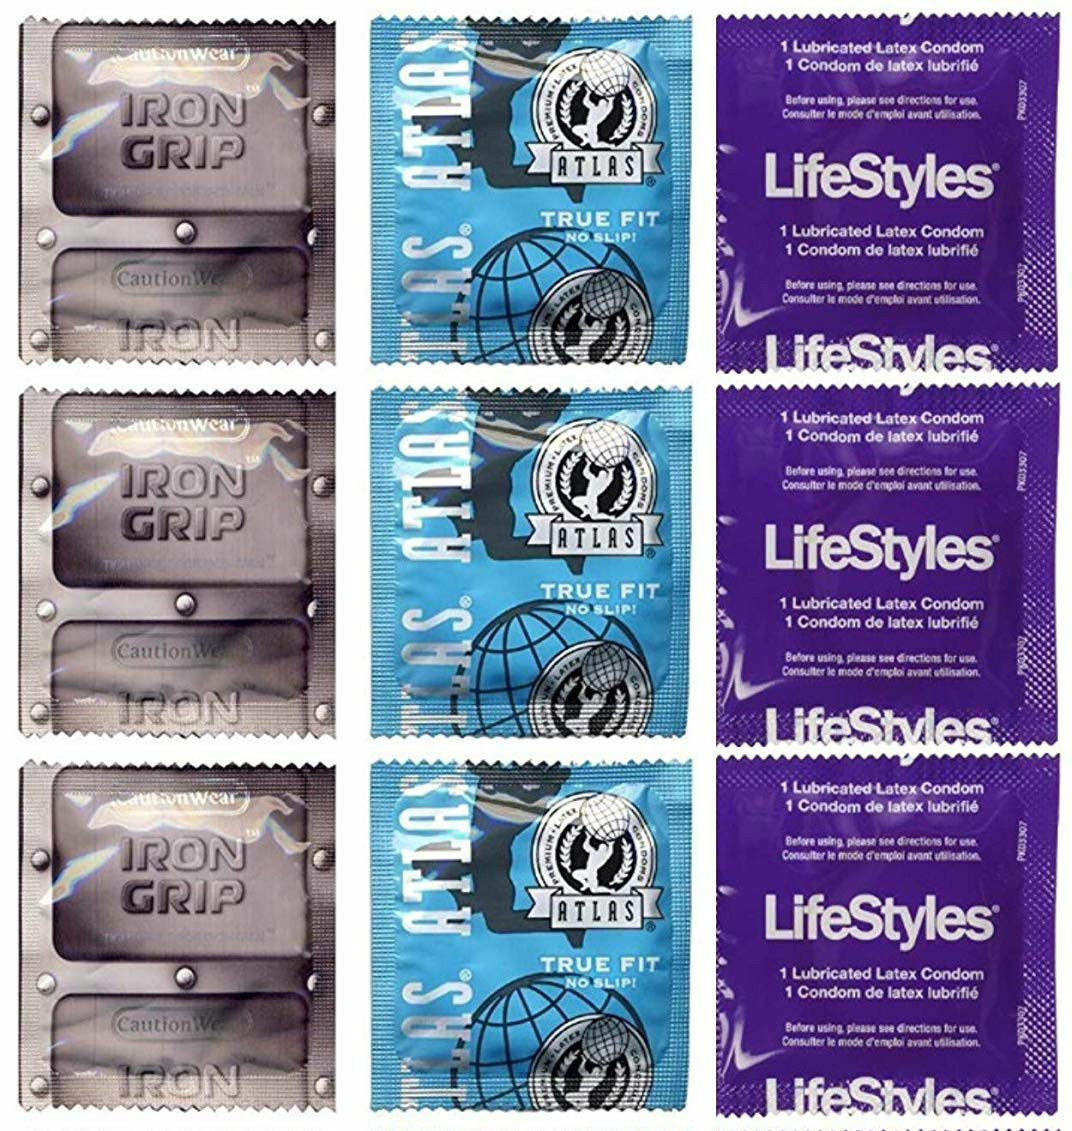 36 Small Snugger Tight Fit Condoms Sampler Pack